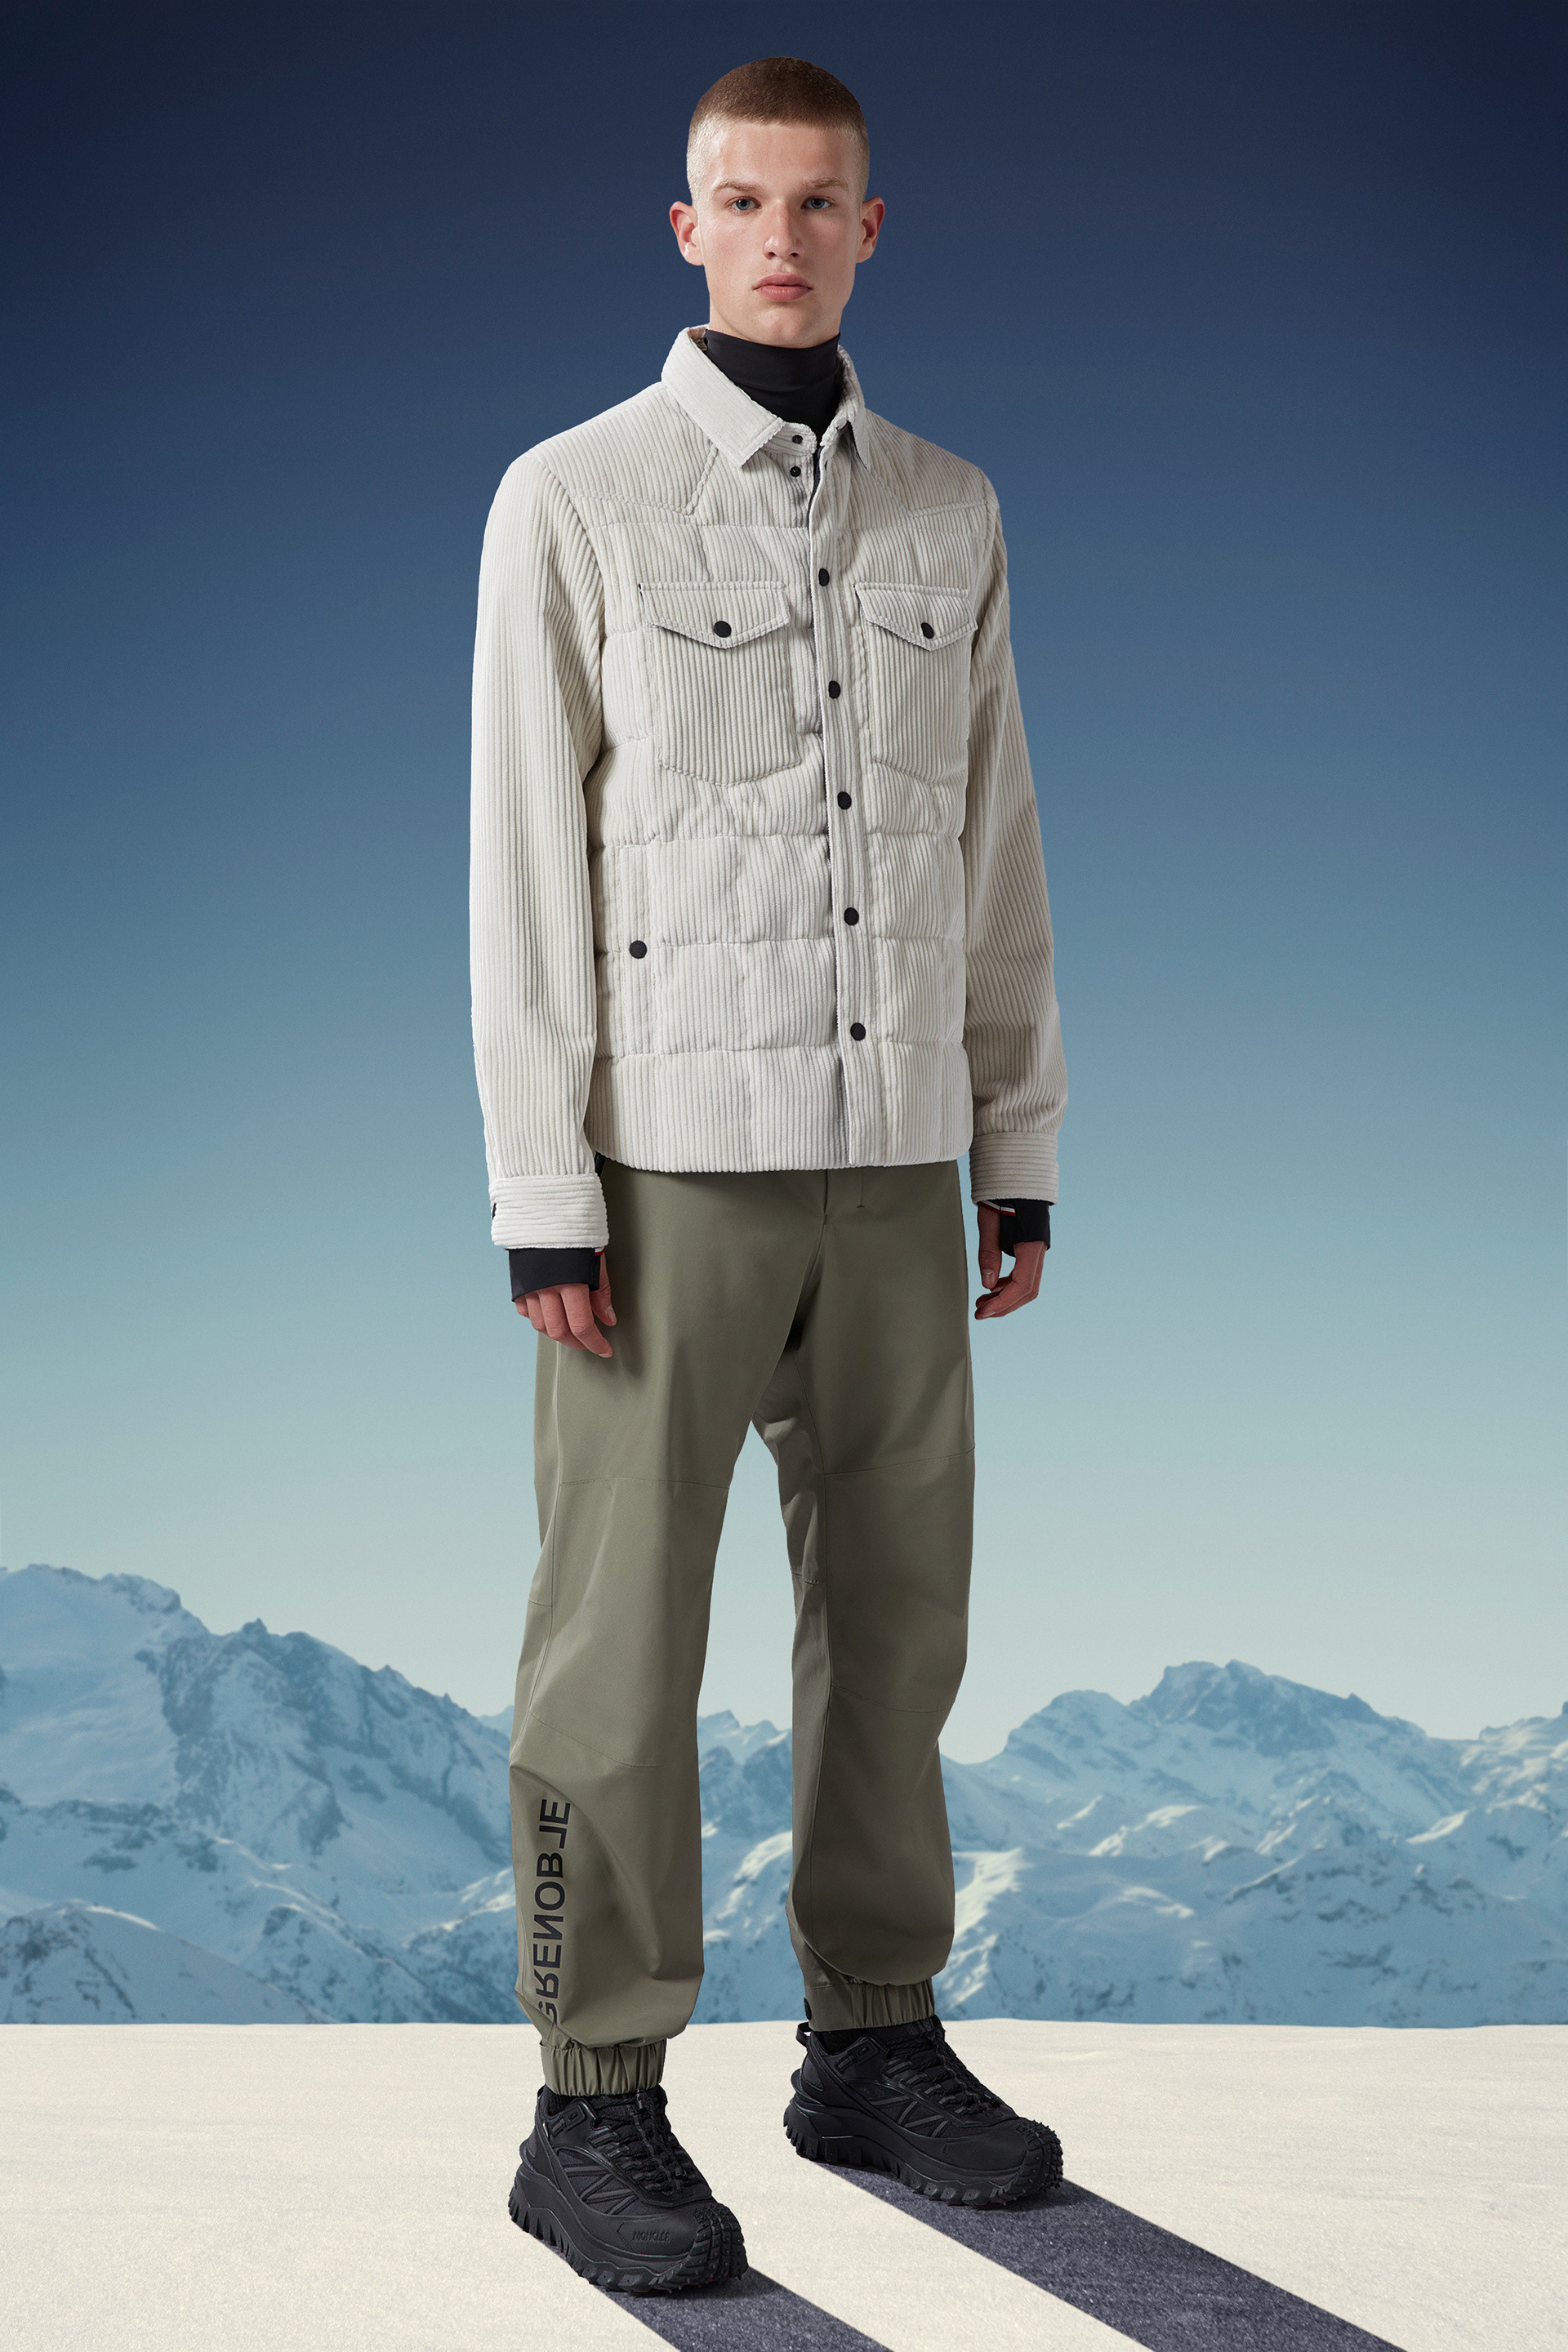 How Moncler Shaped Après-Ski Wear Into Streetwear